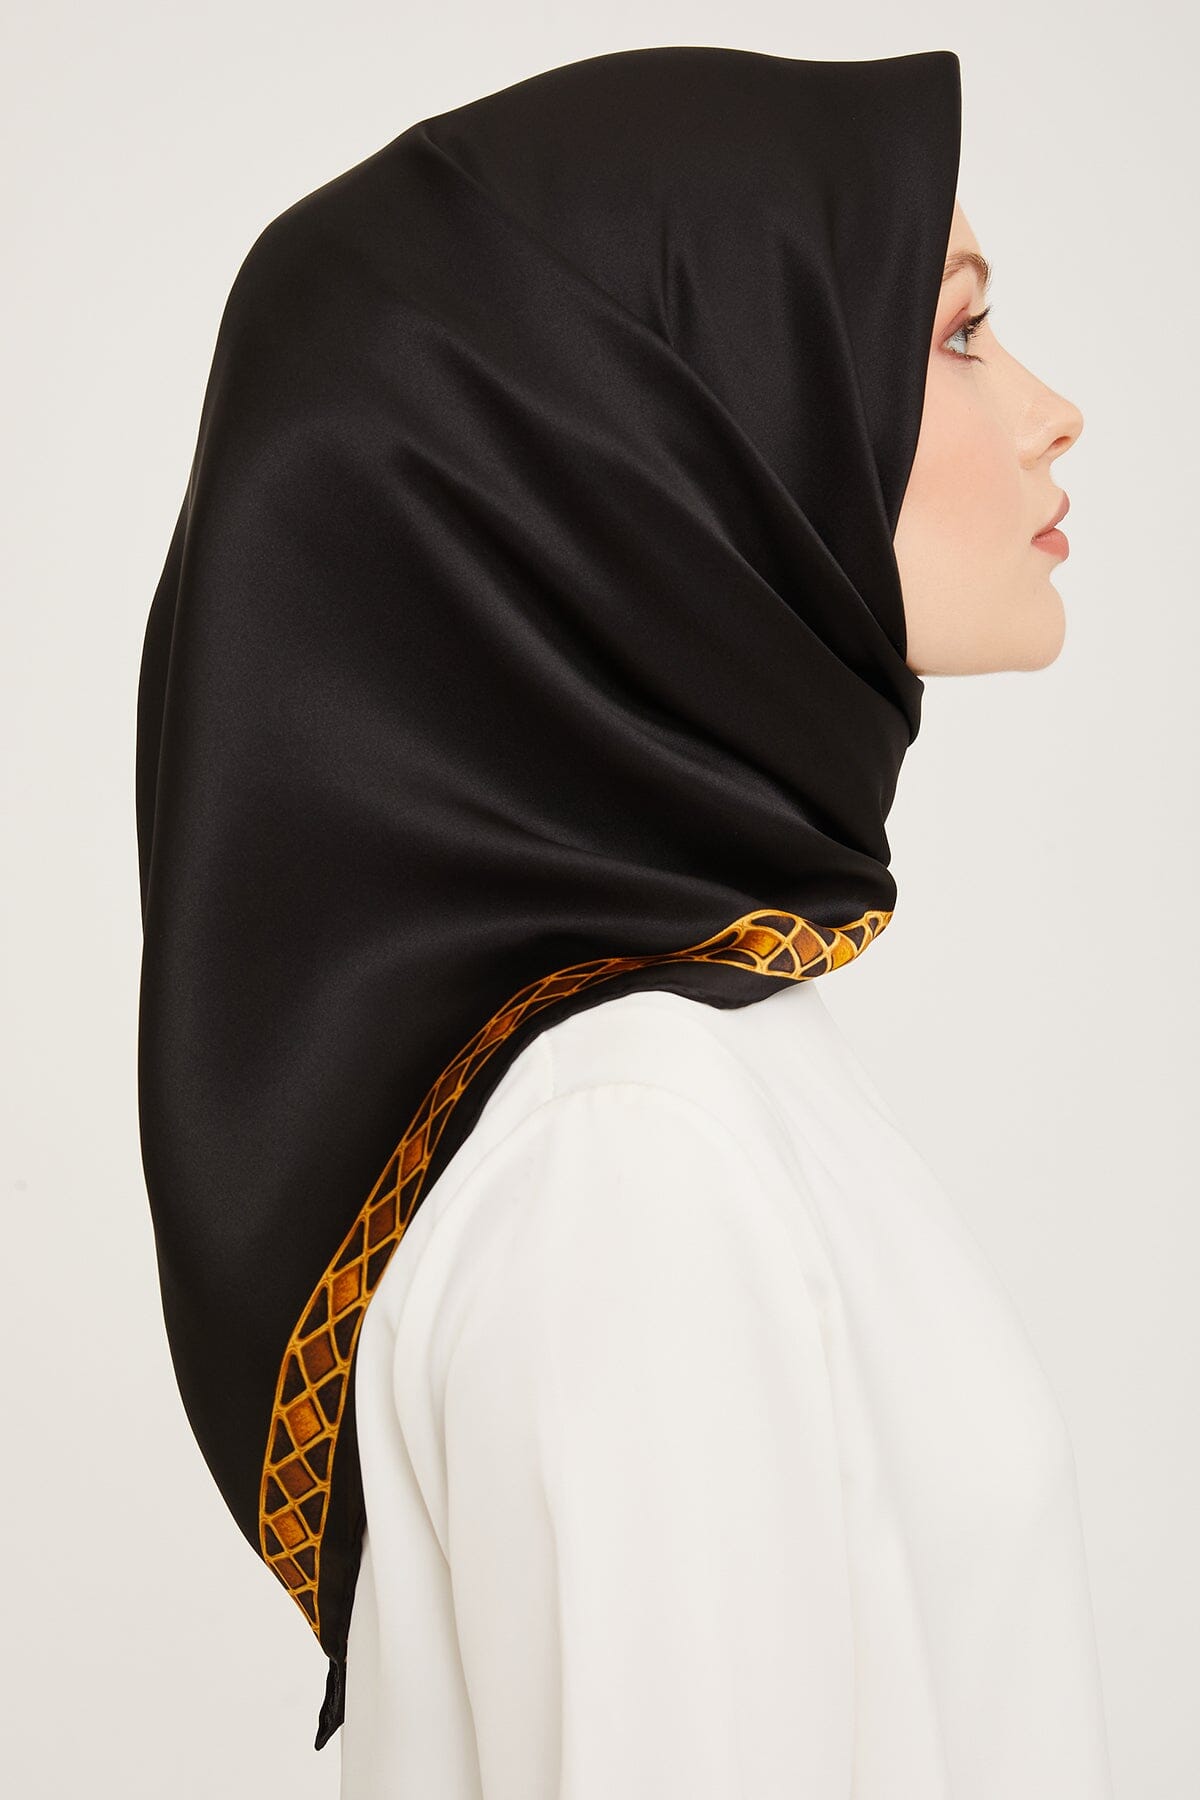 Armine Belle Classy Silk Scarf #3 Silk Hijabs,Armine Armine 